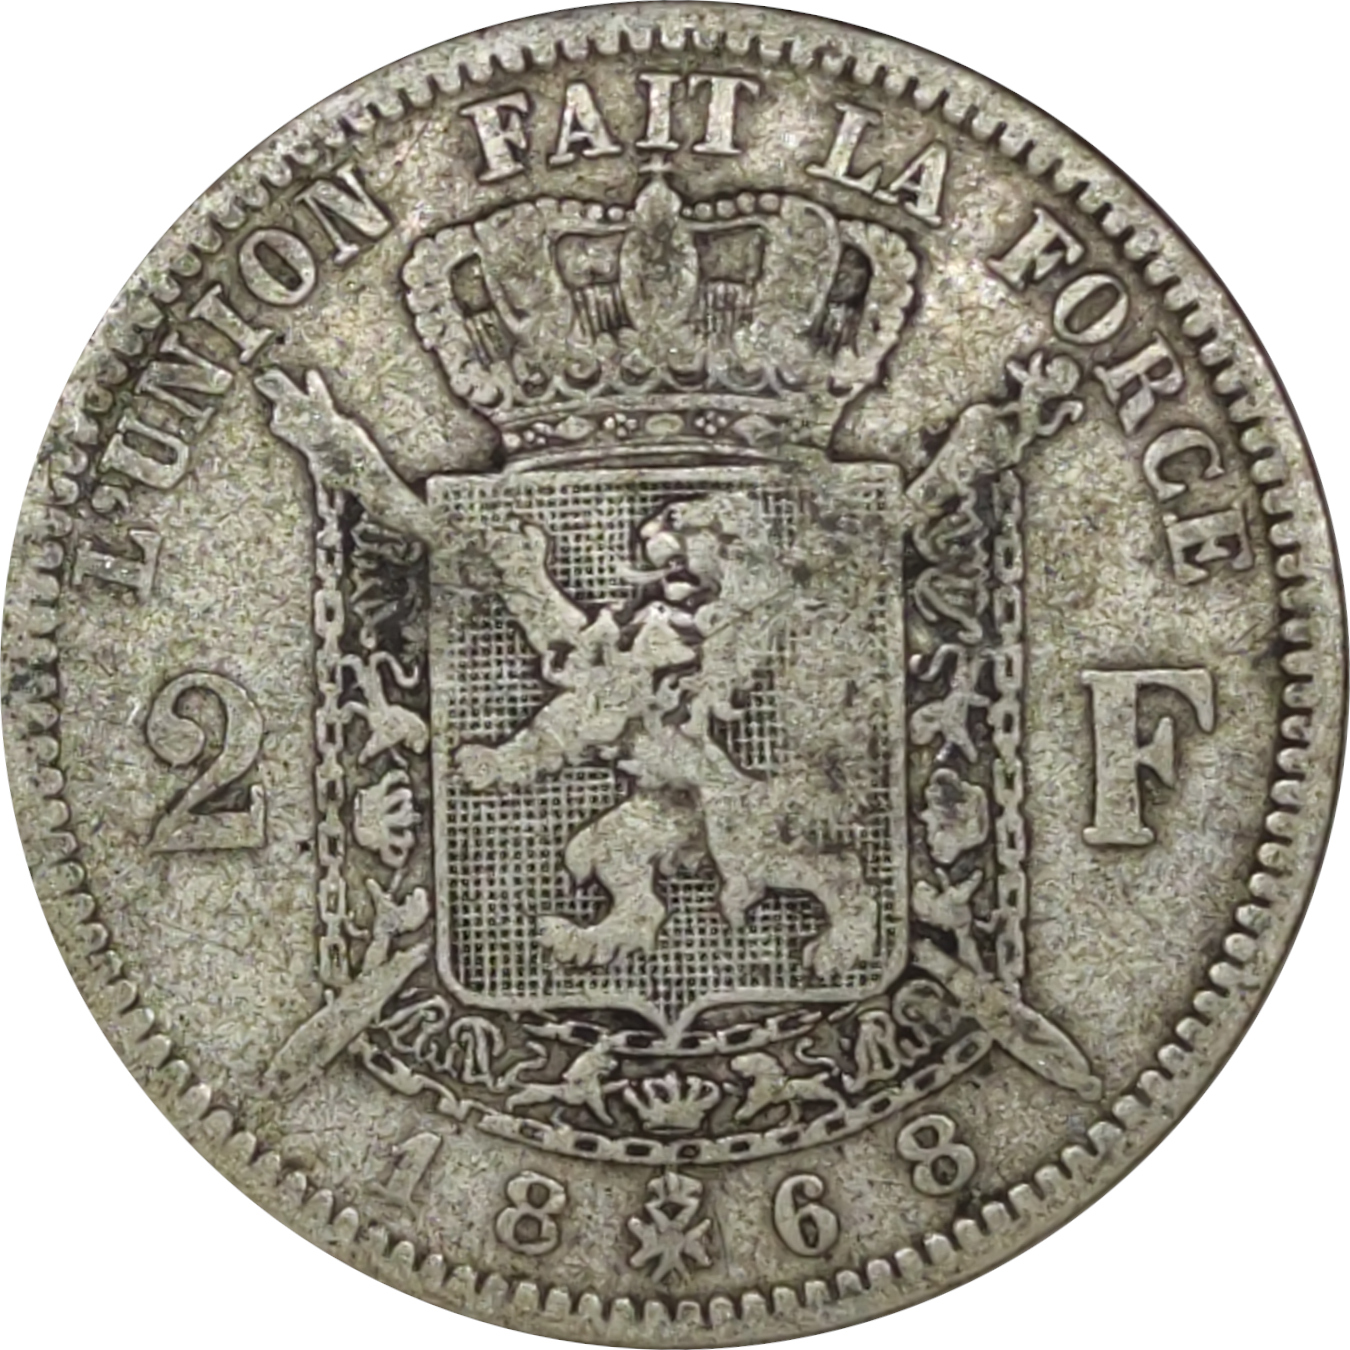 2 francs - Leopold II - Young head